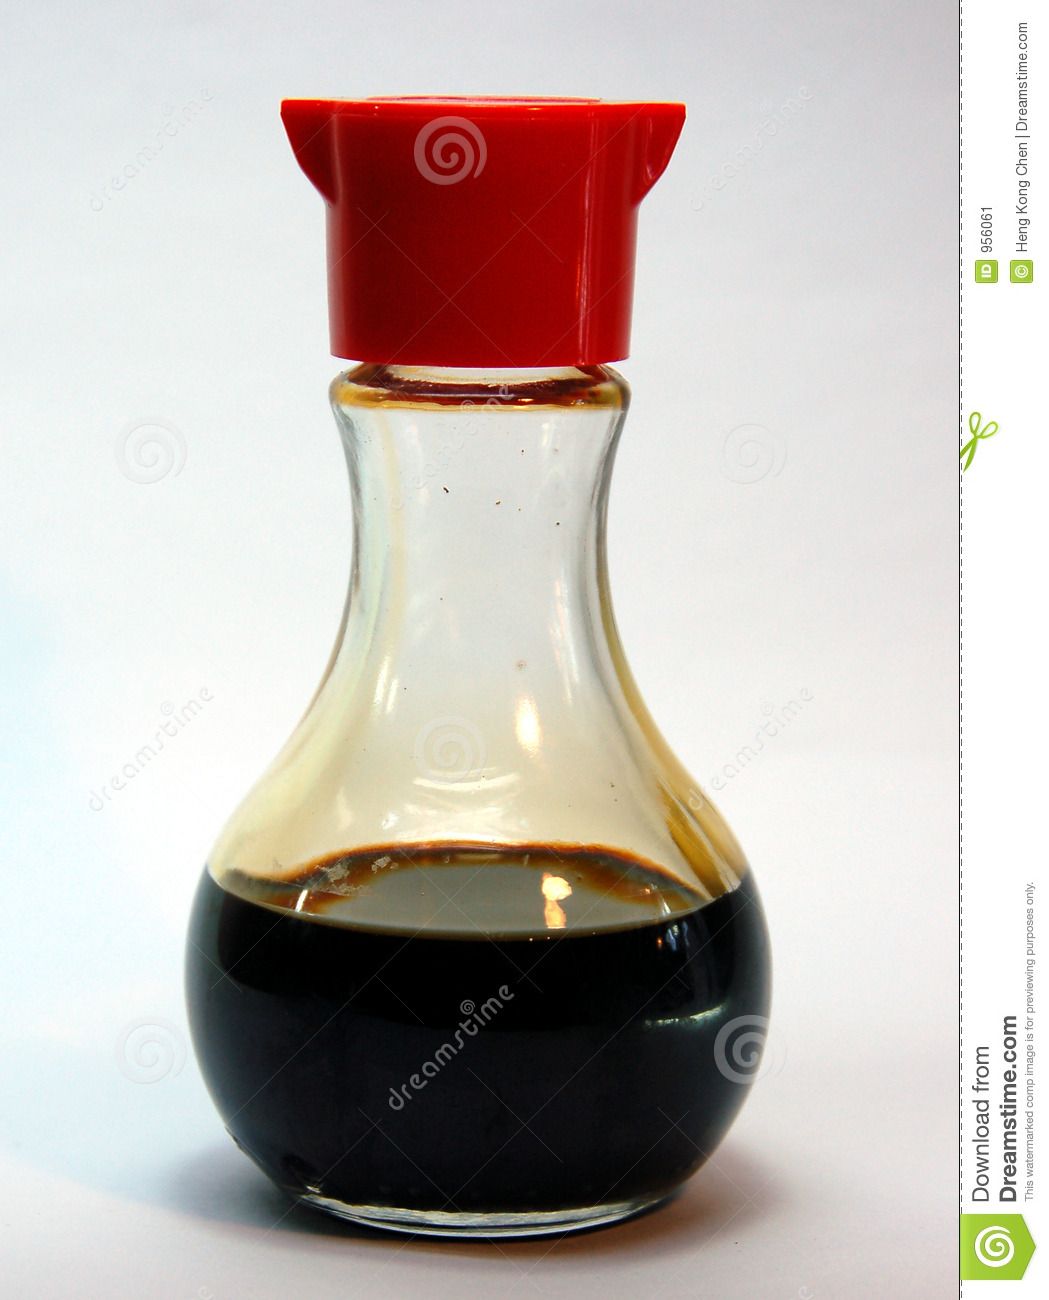 Soy Sauce Clipart Soya Sauce Bottle Stock Image   Image  956061